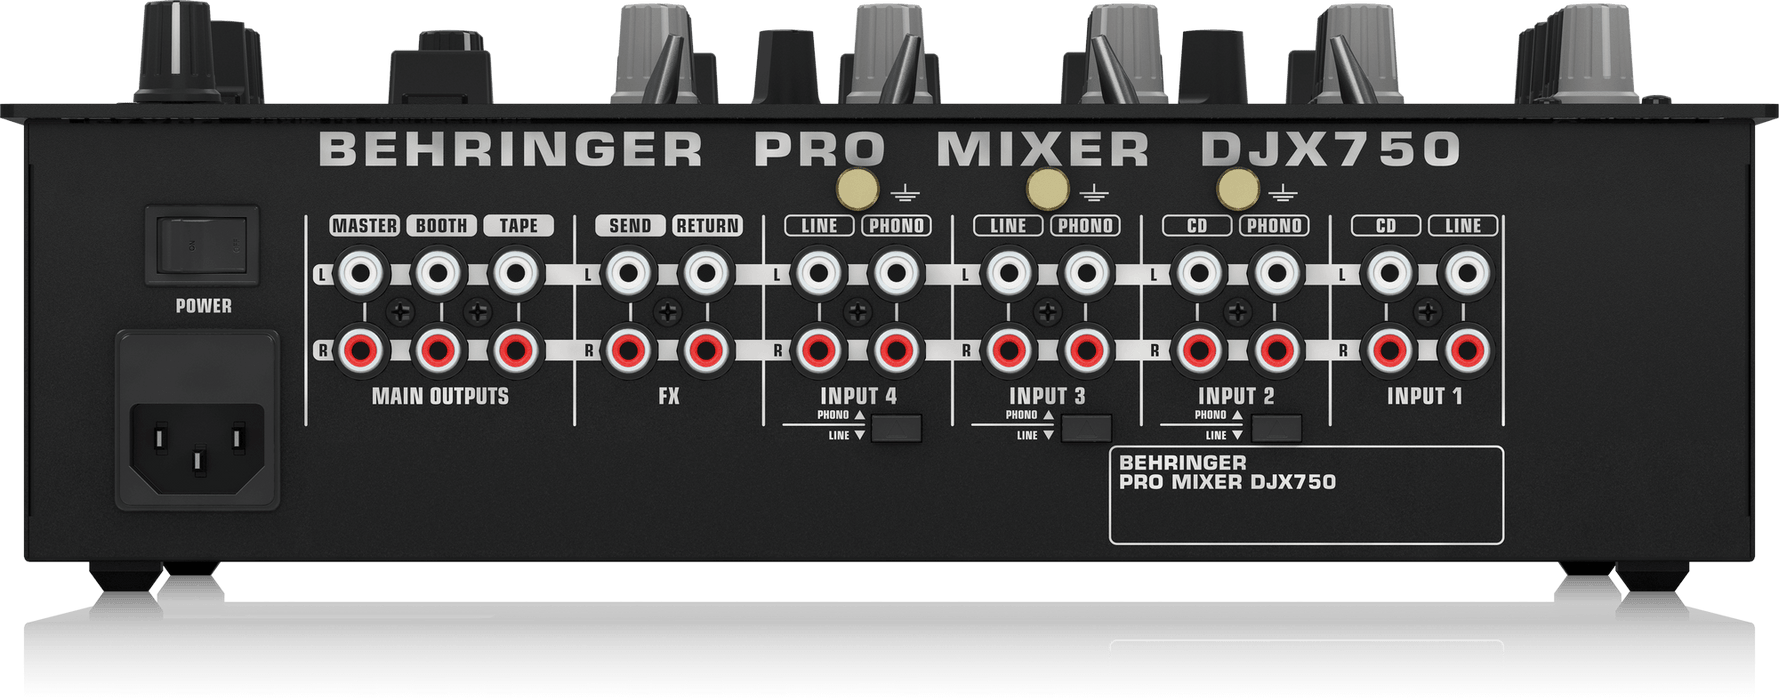 Behringer Pro Mixer DJX750 4-channel DJ Mixer (DJX-750 / DJX 750) - Music Bliss Malaysia